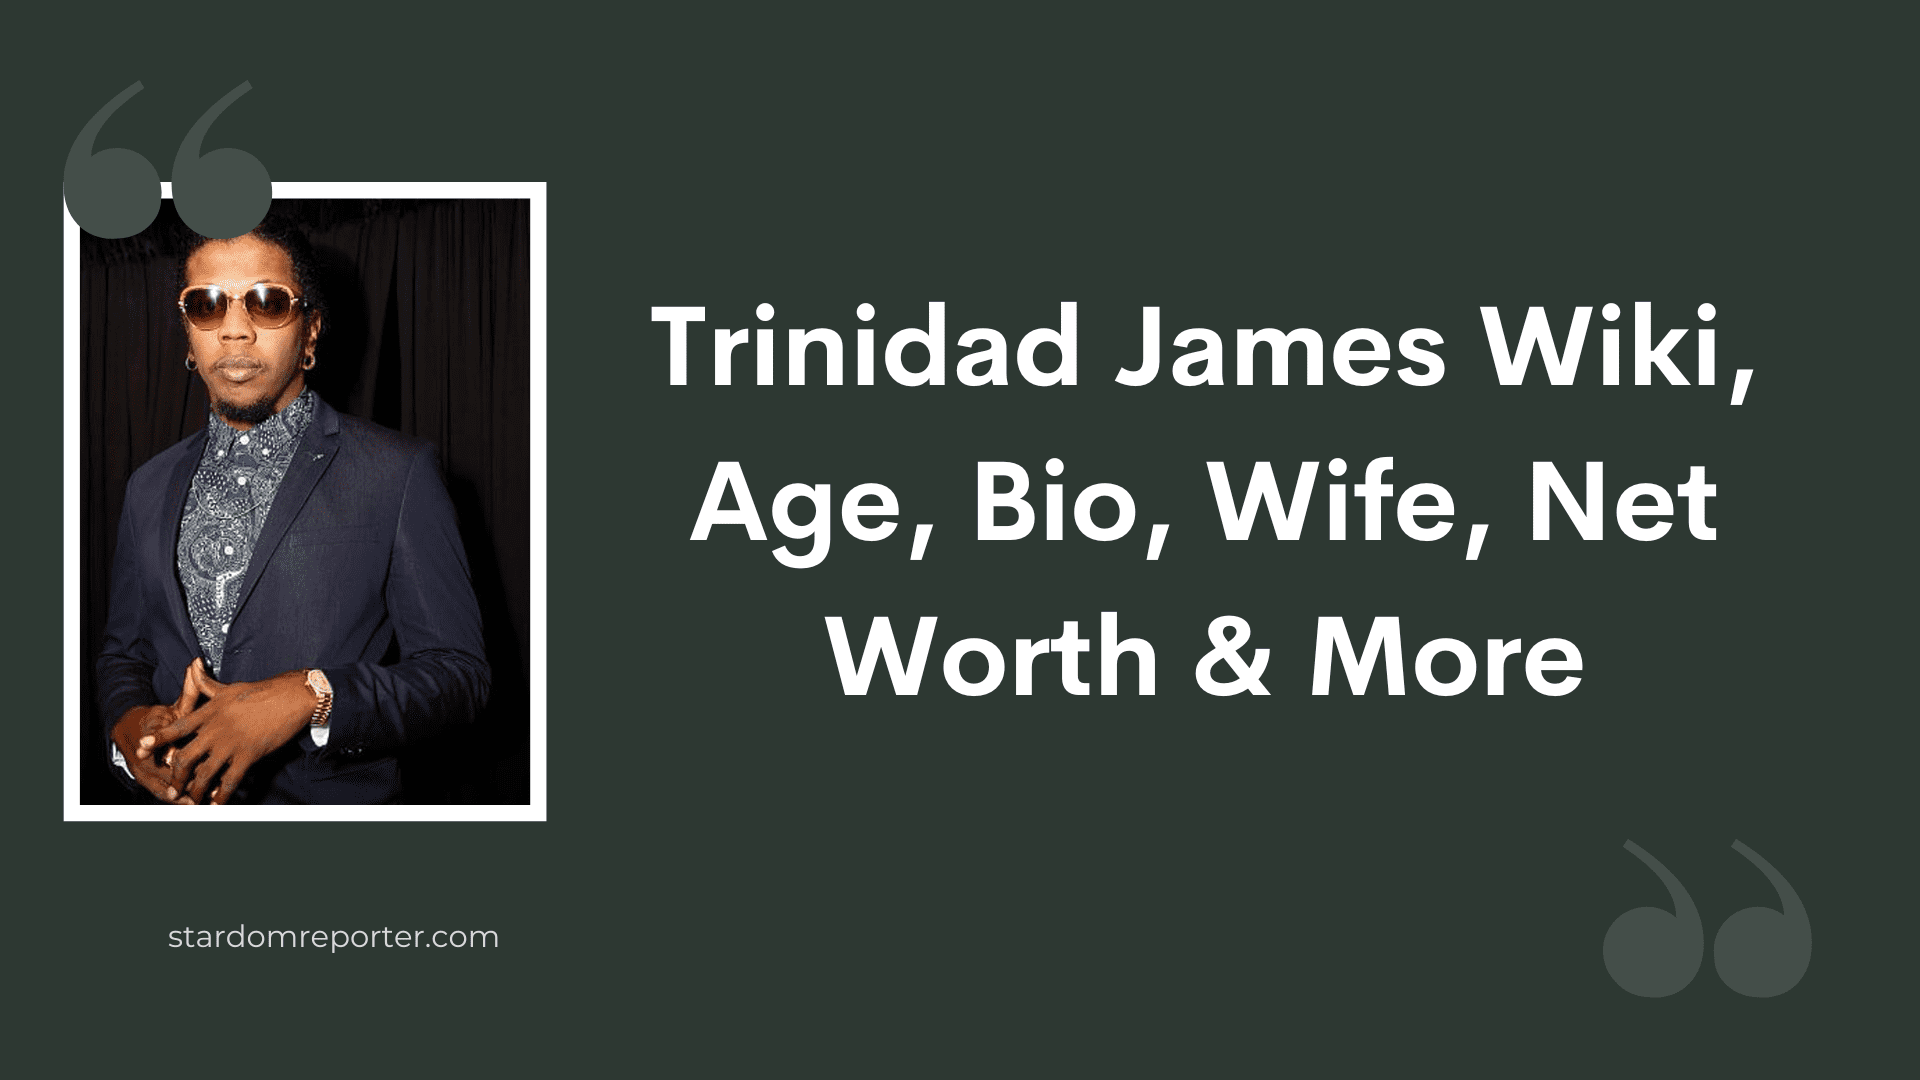 Trinidad James Wiki, Age, Bio, Wife, Net Worth & More - 15